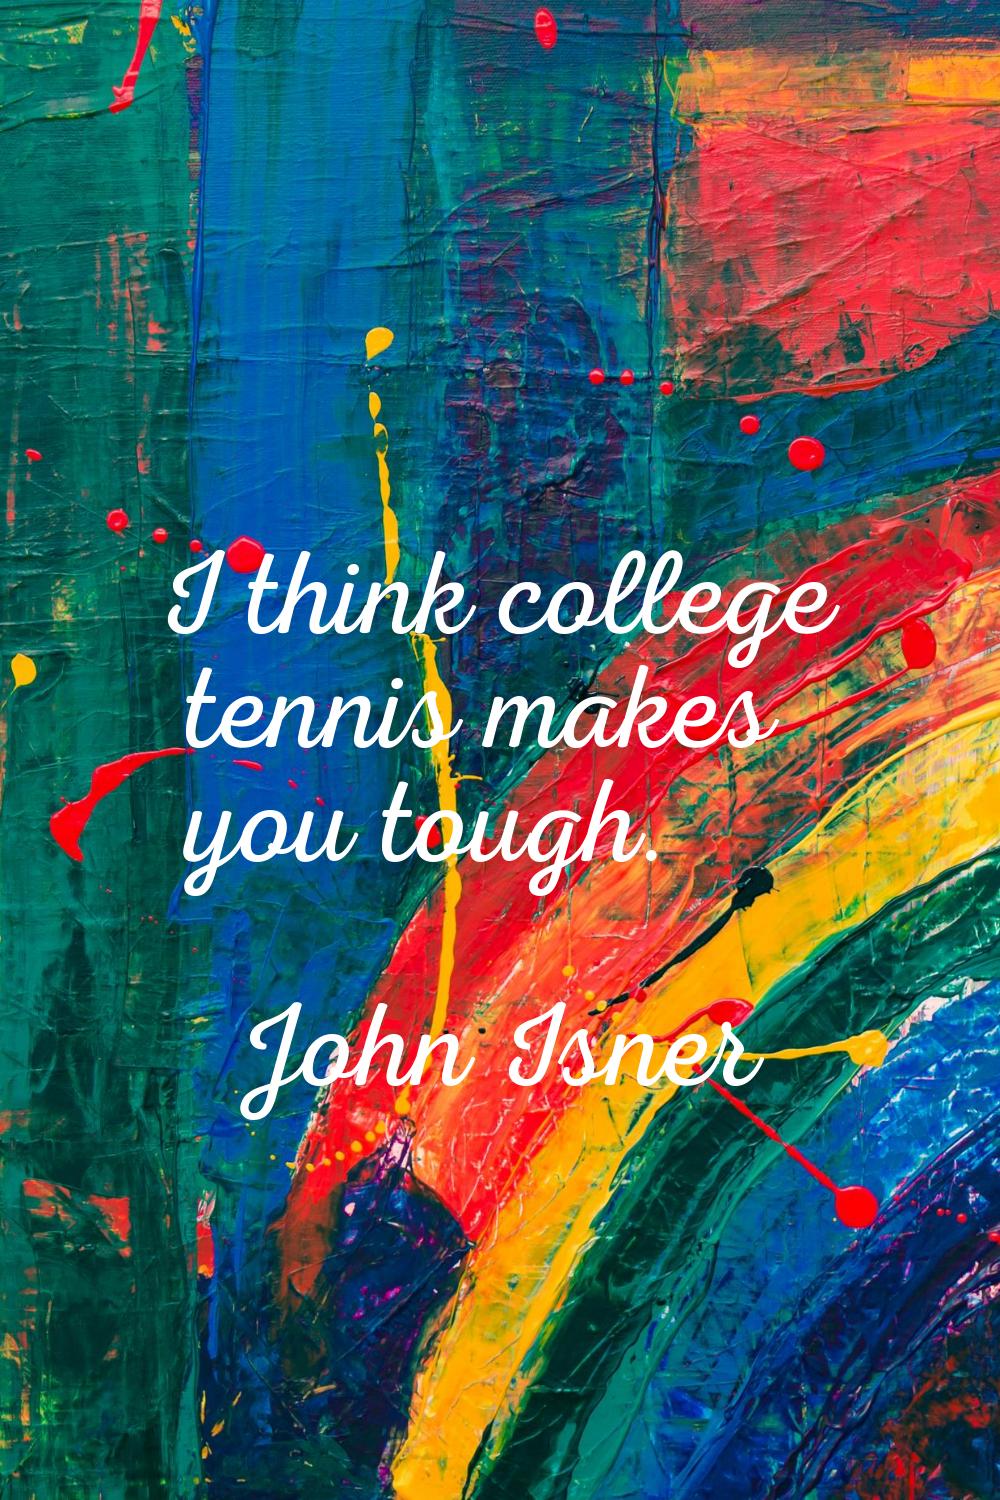 I think college tennis makes you tough.